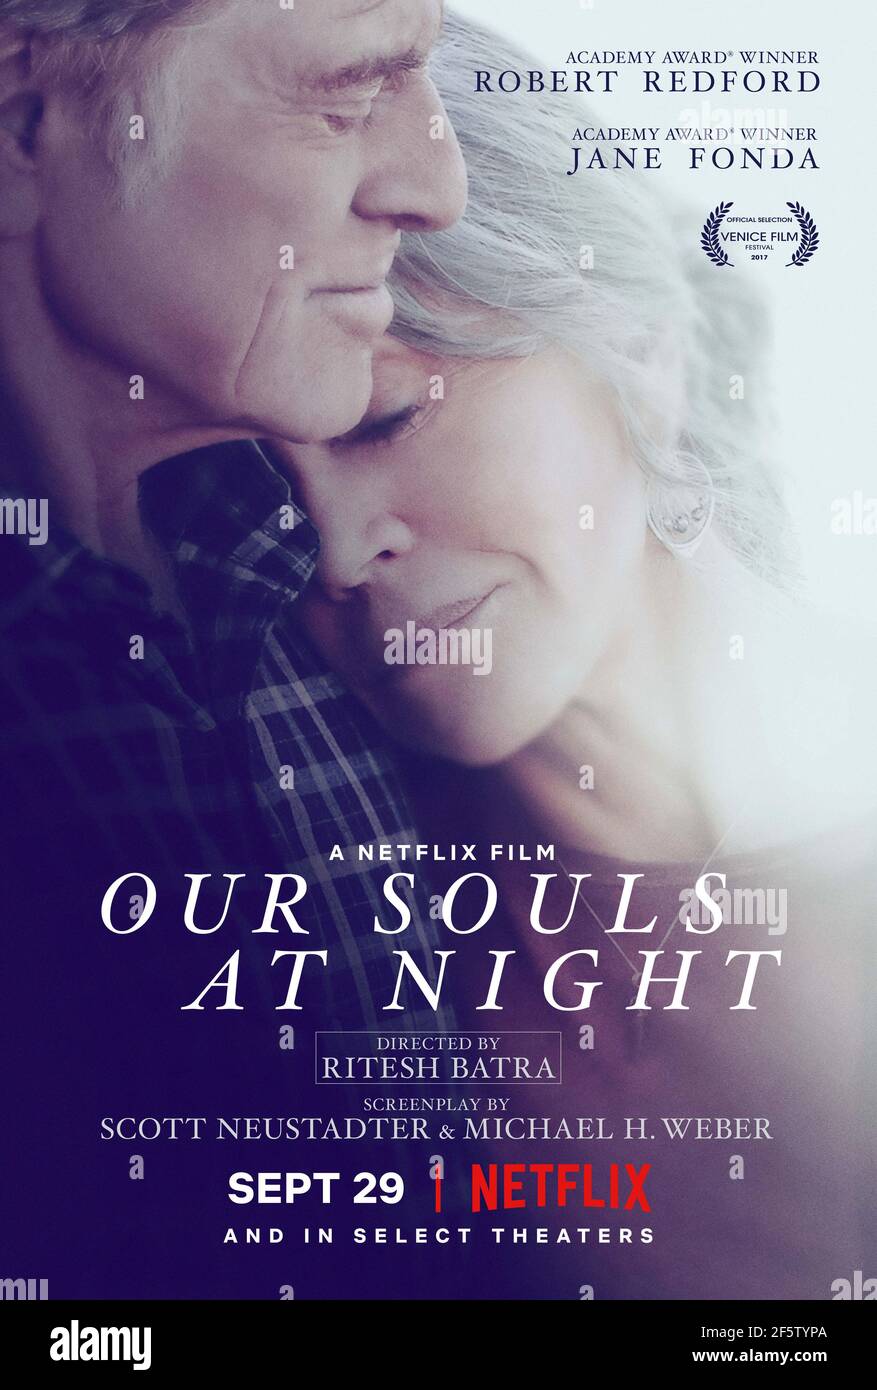 JANE FONDA and ROBERT REDFORD in OUR SOULS AT NIGHT (2017), directed by RITESH BATRA. Credit: Netflix / Wildgaze Films / Album Stock Photo